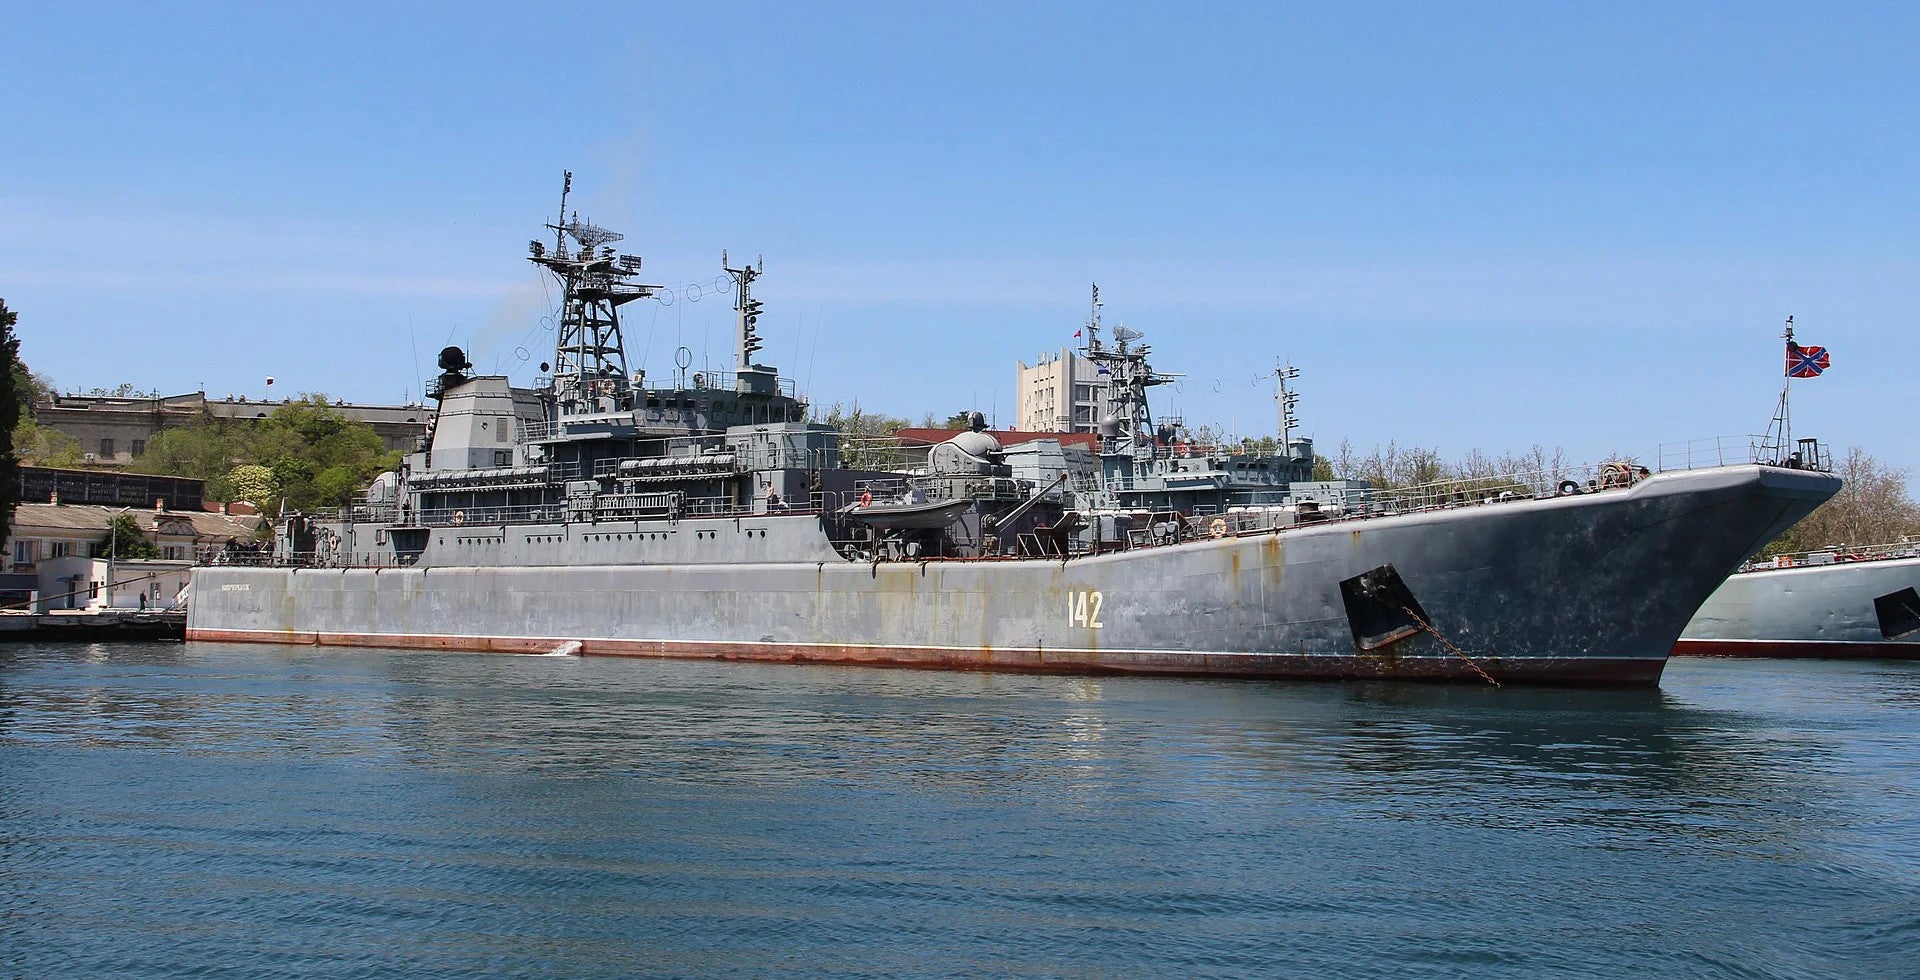 The Ropucha class landing ship Novocherkassk. (Vadim Indeikin via Wikicommons)